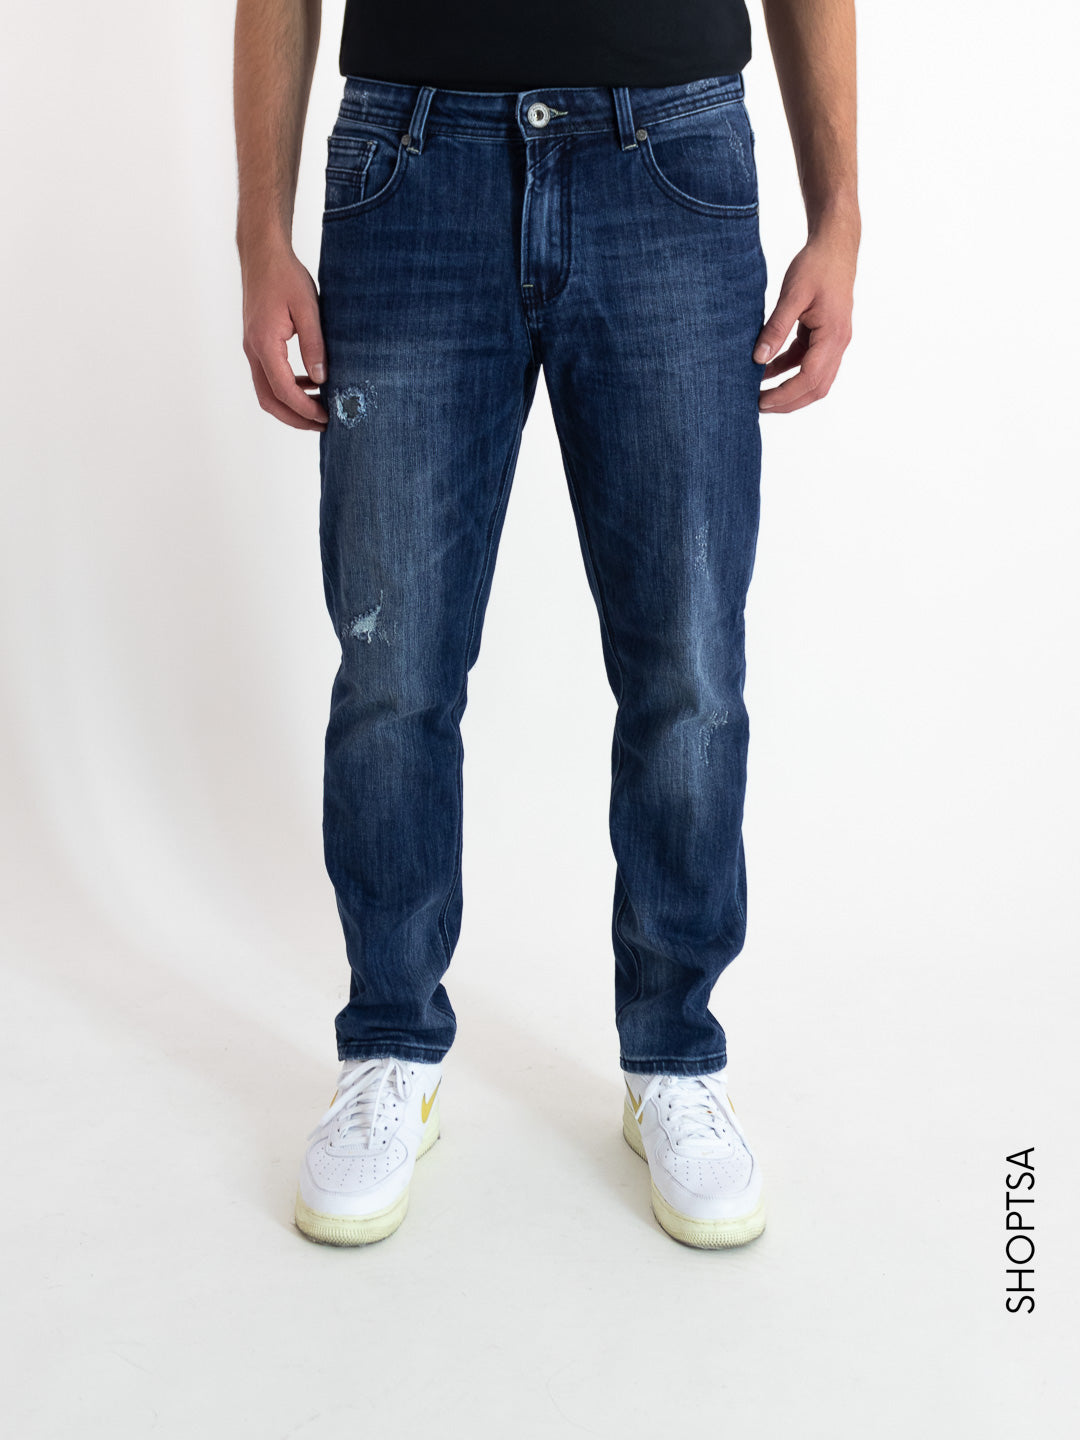 Jeans leggere rotture - Cliver Jeans